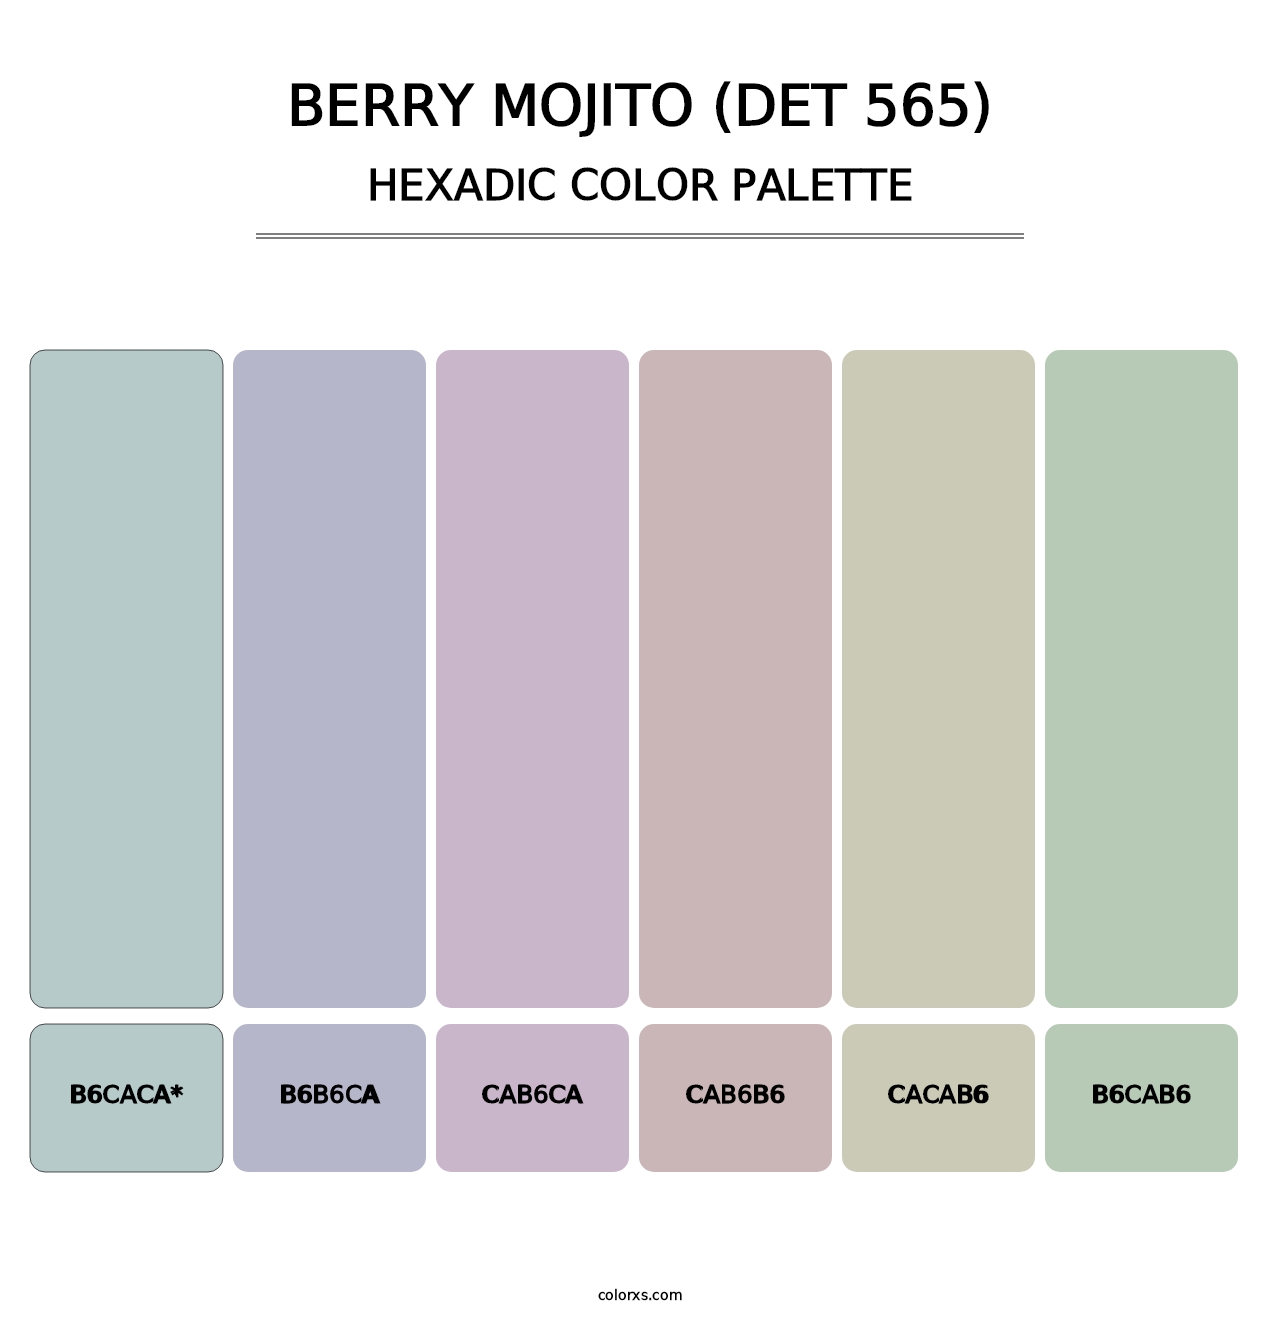 Berry Mojito (DET 565) - Hexadic Color Palette